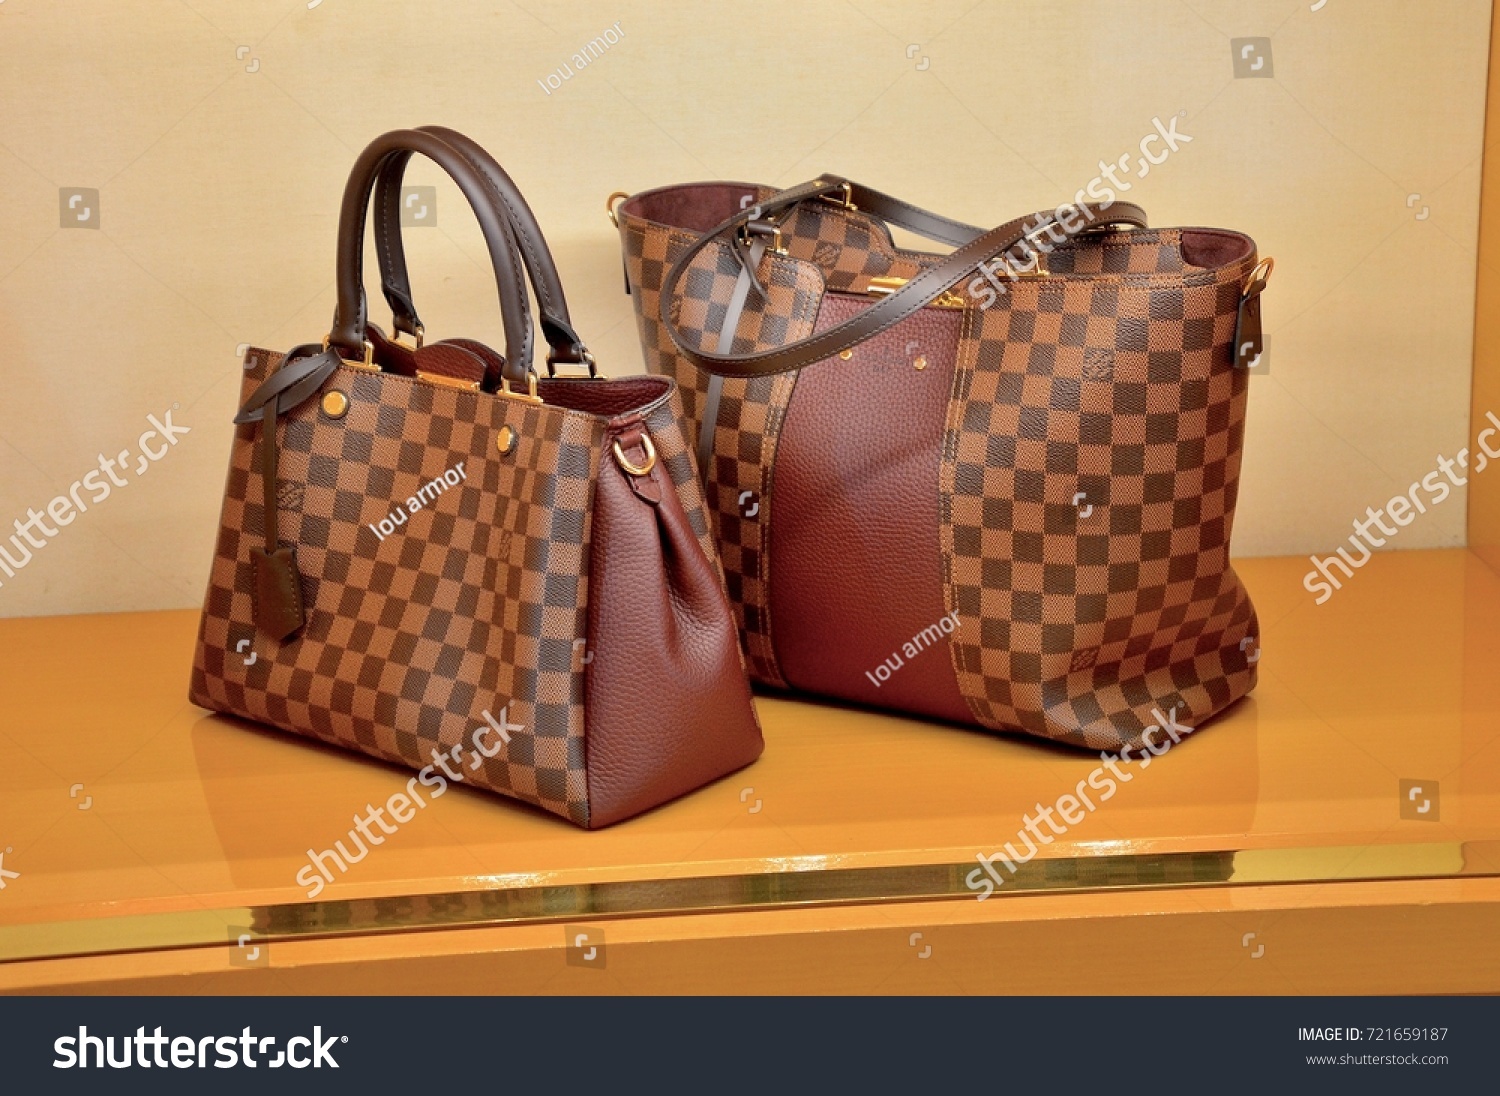 Vuitton Designer Handbags Luxury French Stock Photo (Edit 721659187